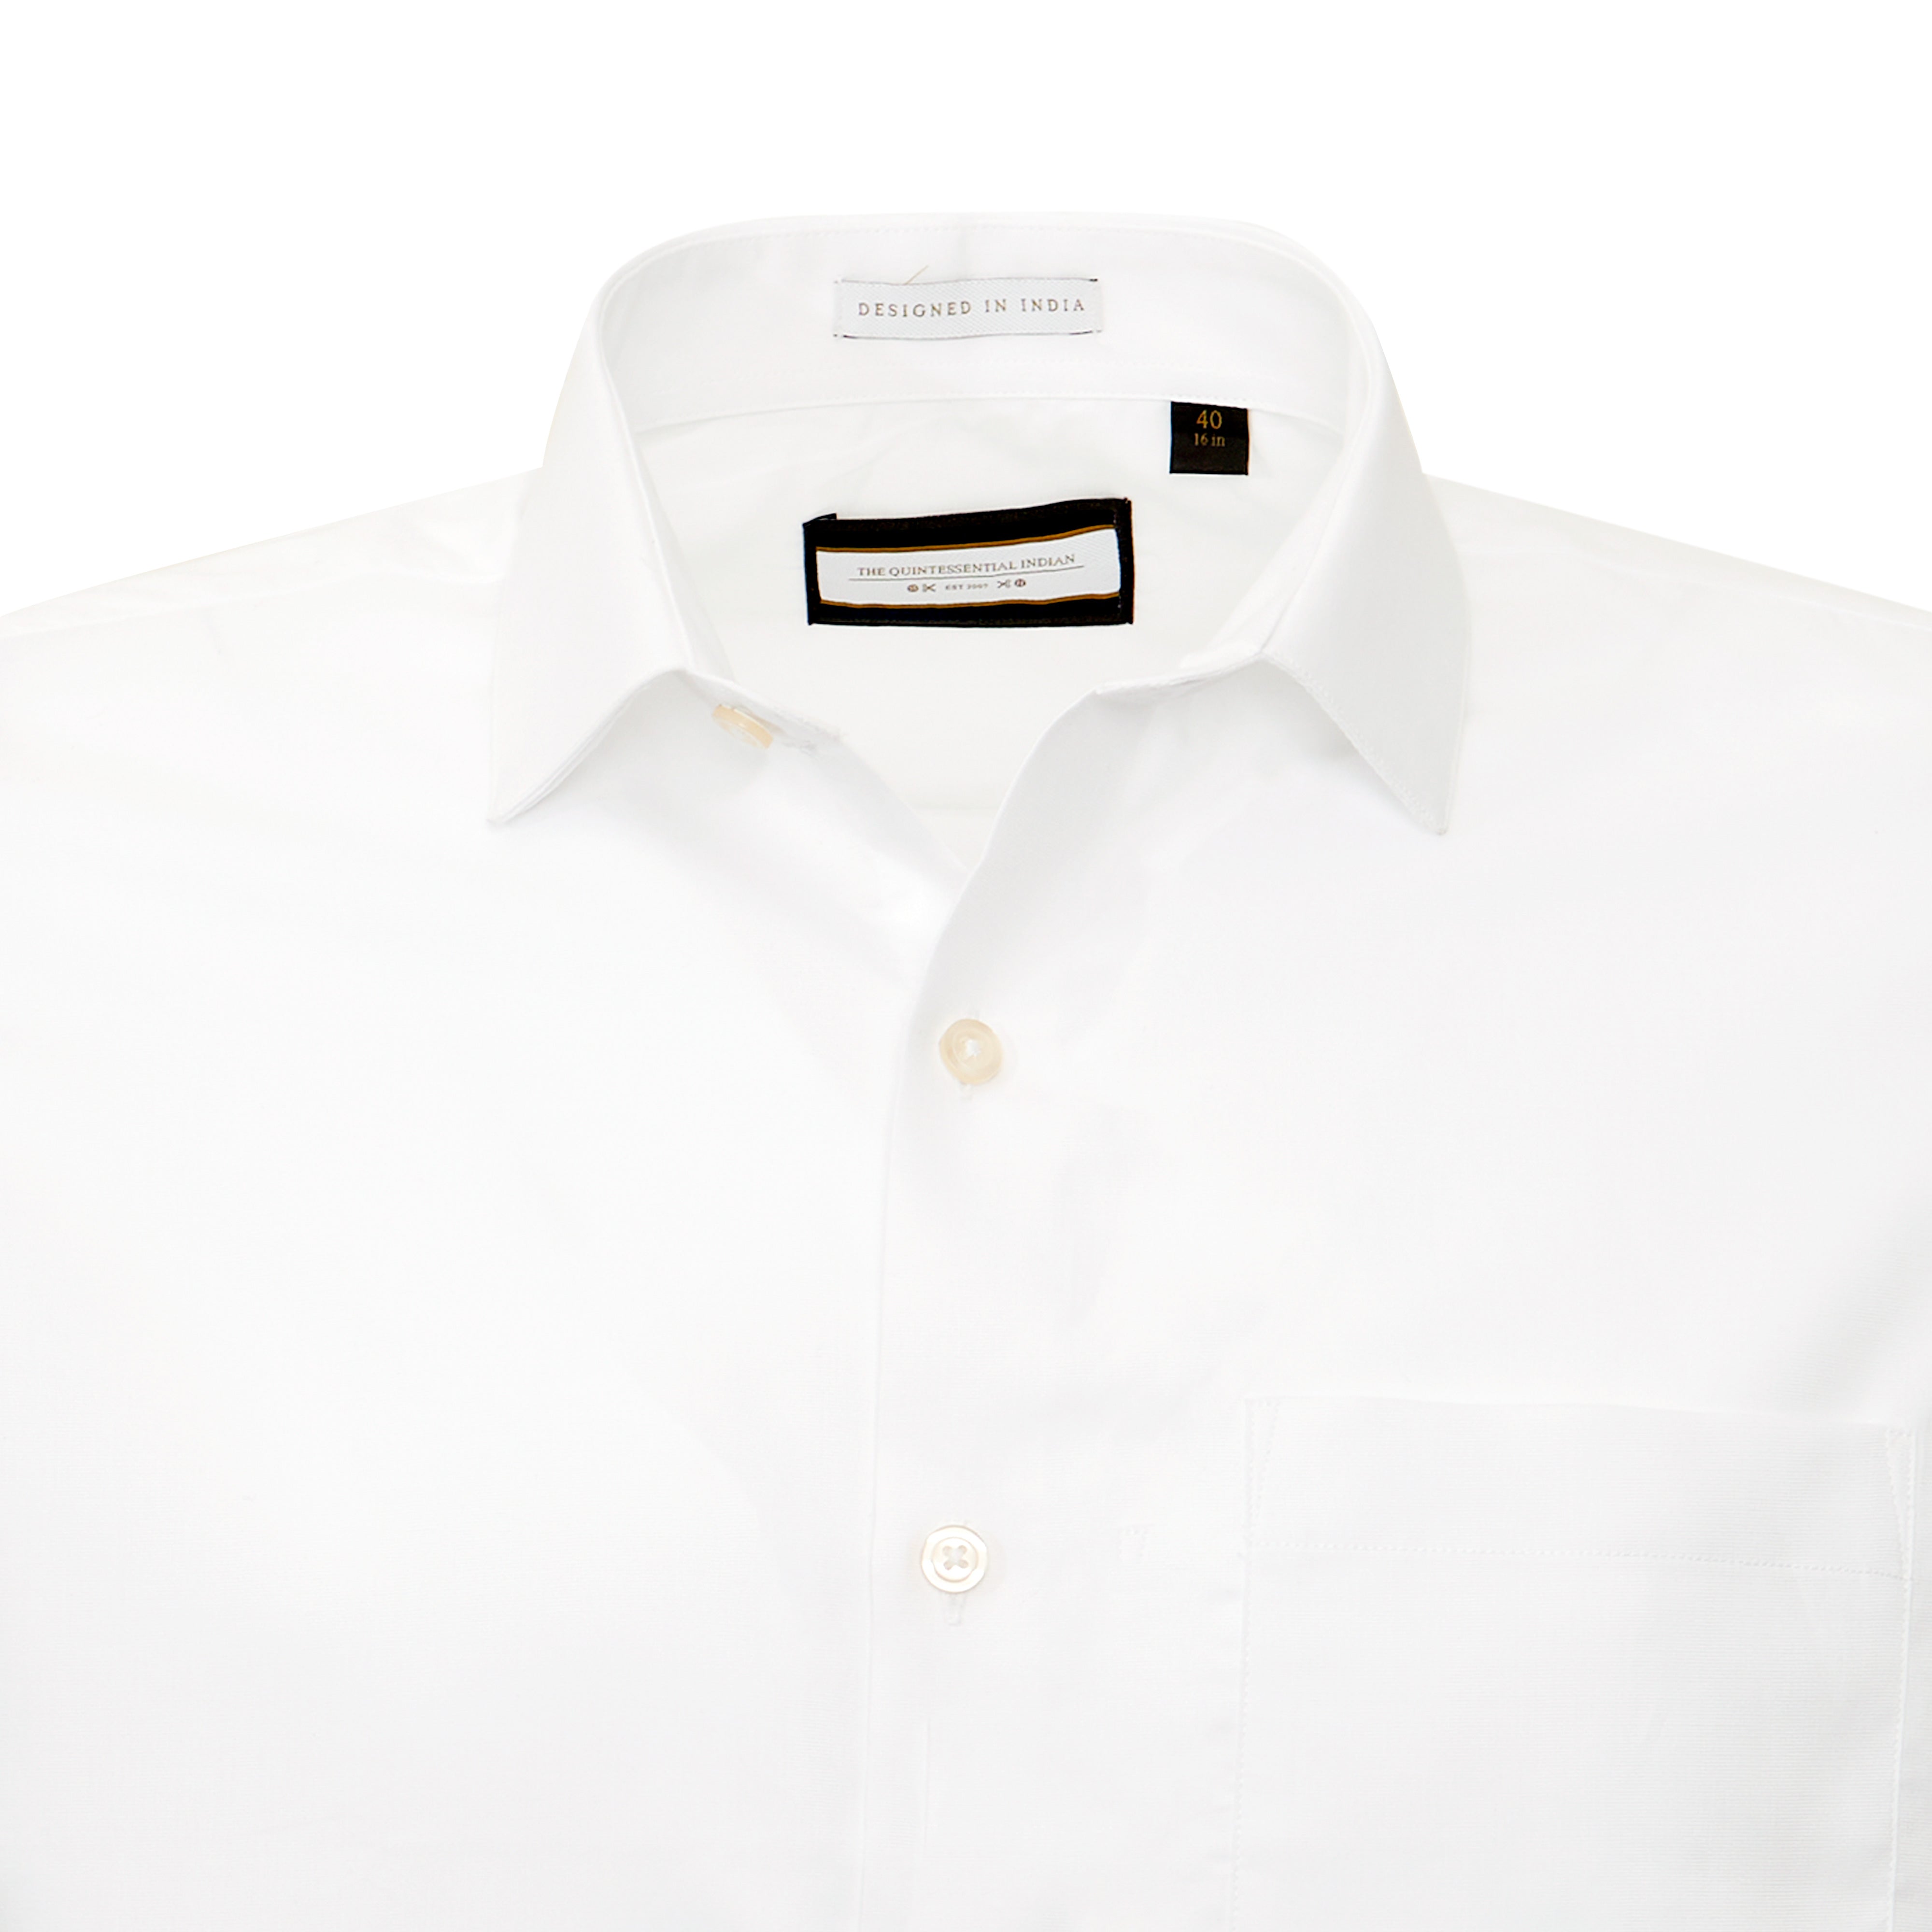 Supima Cotton White Full-sleeved shirt